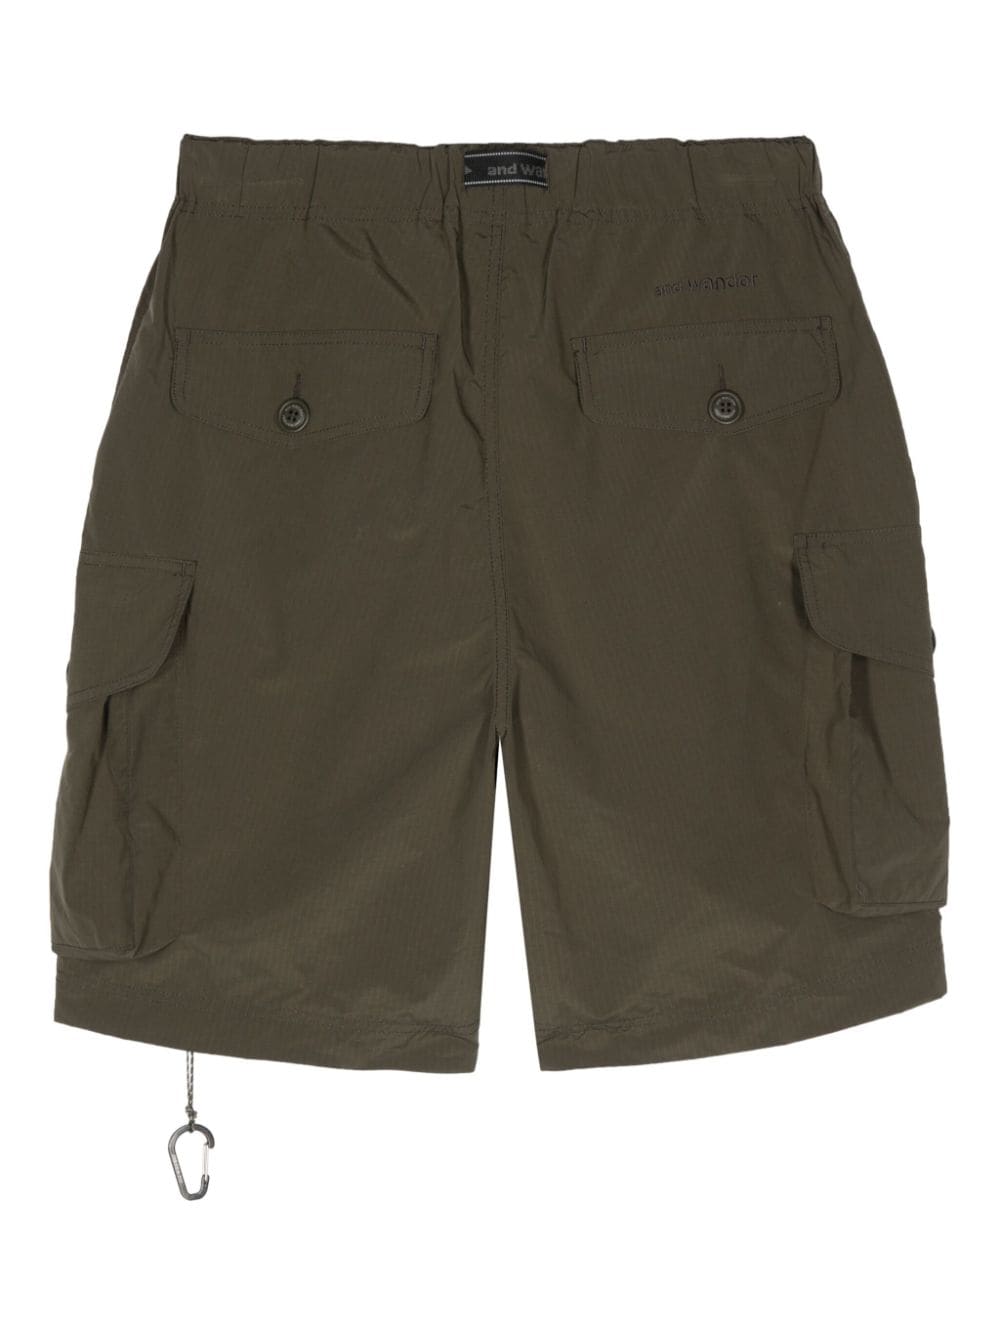 and Wander ripstop cargo shorts - Groen